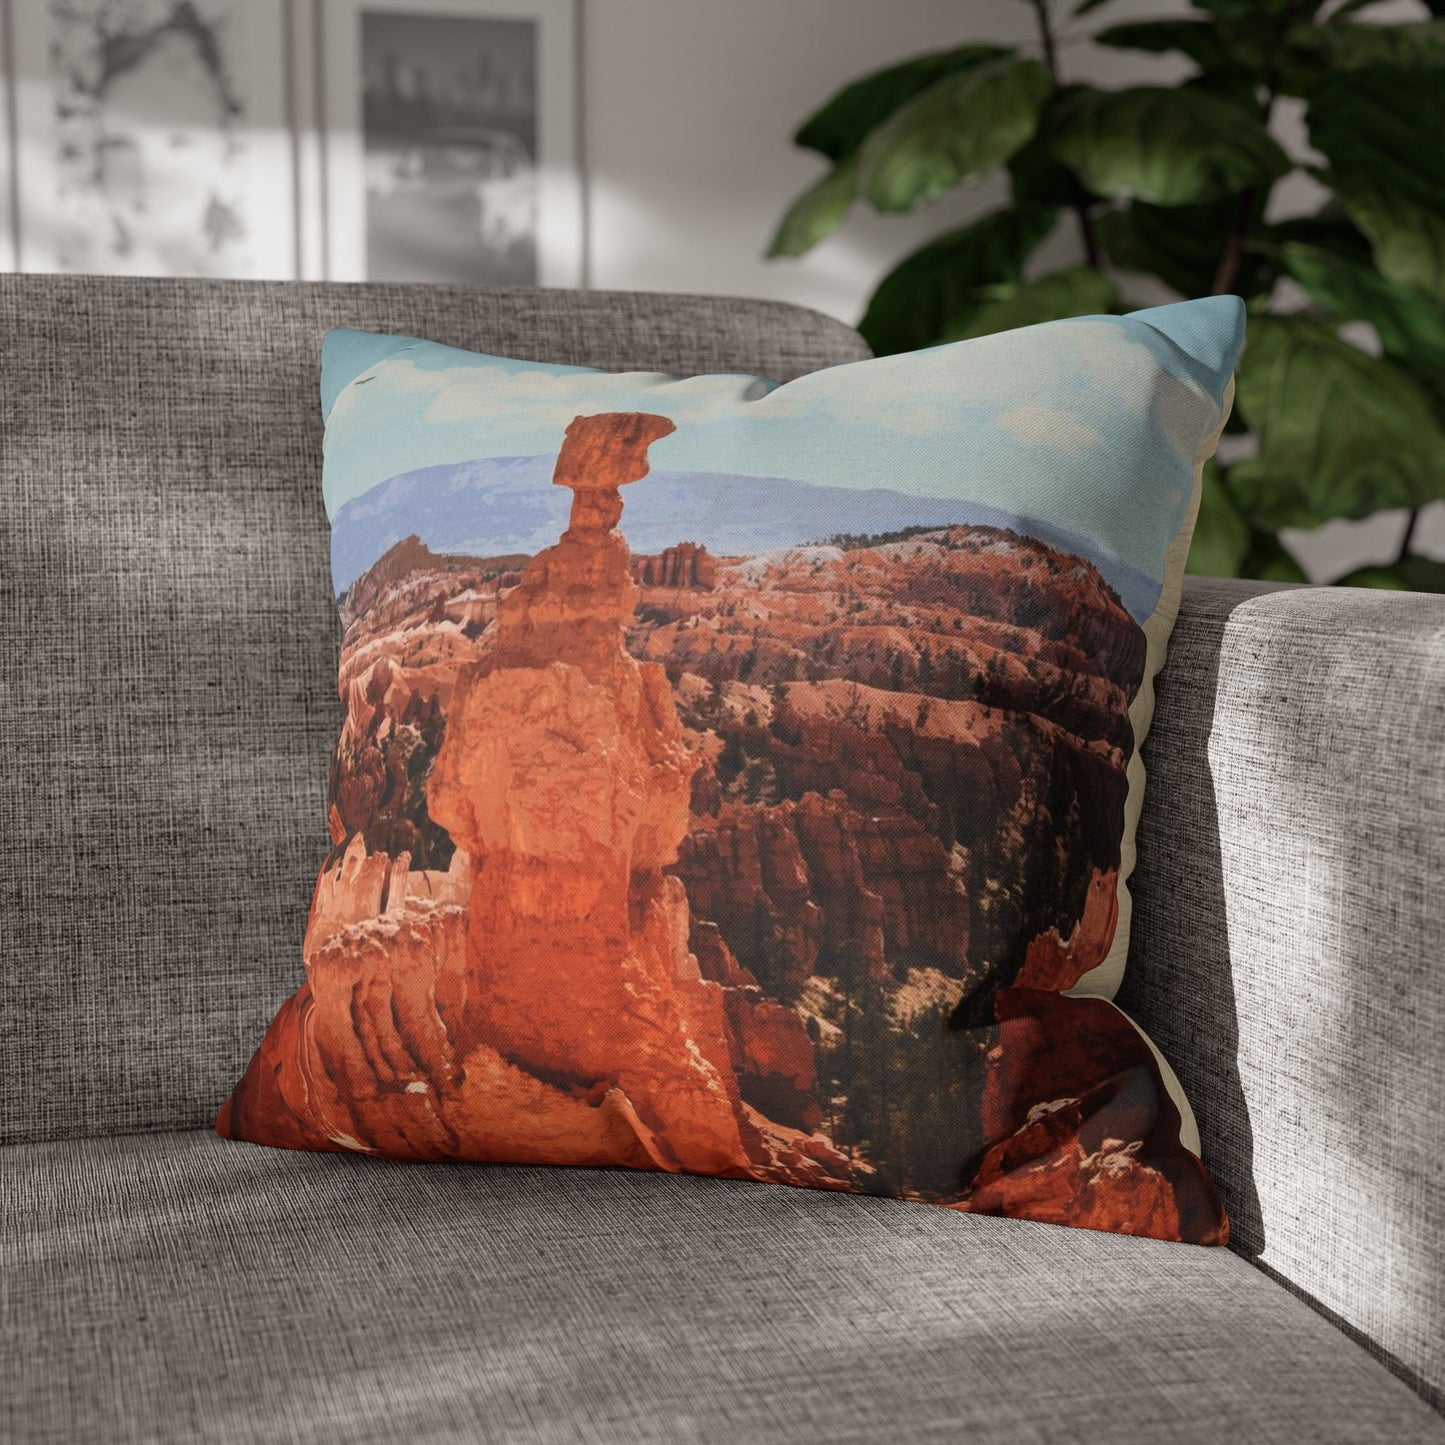 Bryce Canyon National Park Throw Pillow